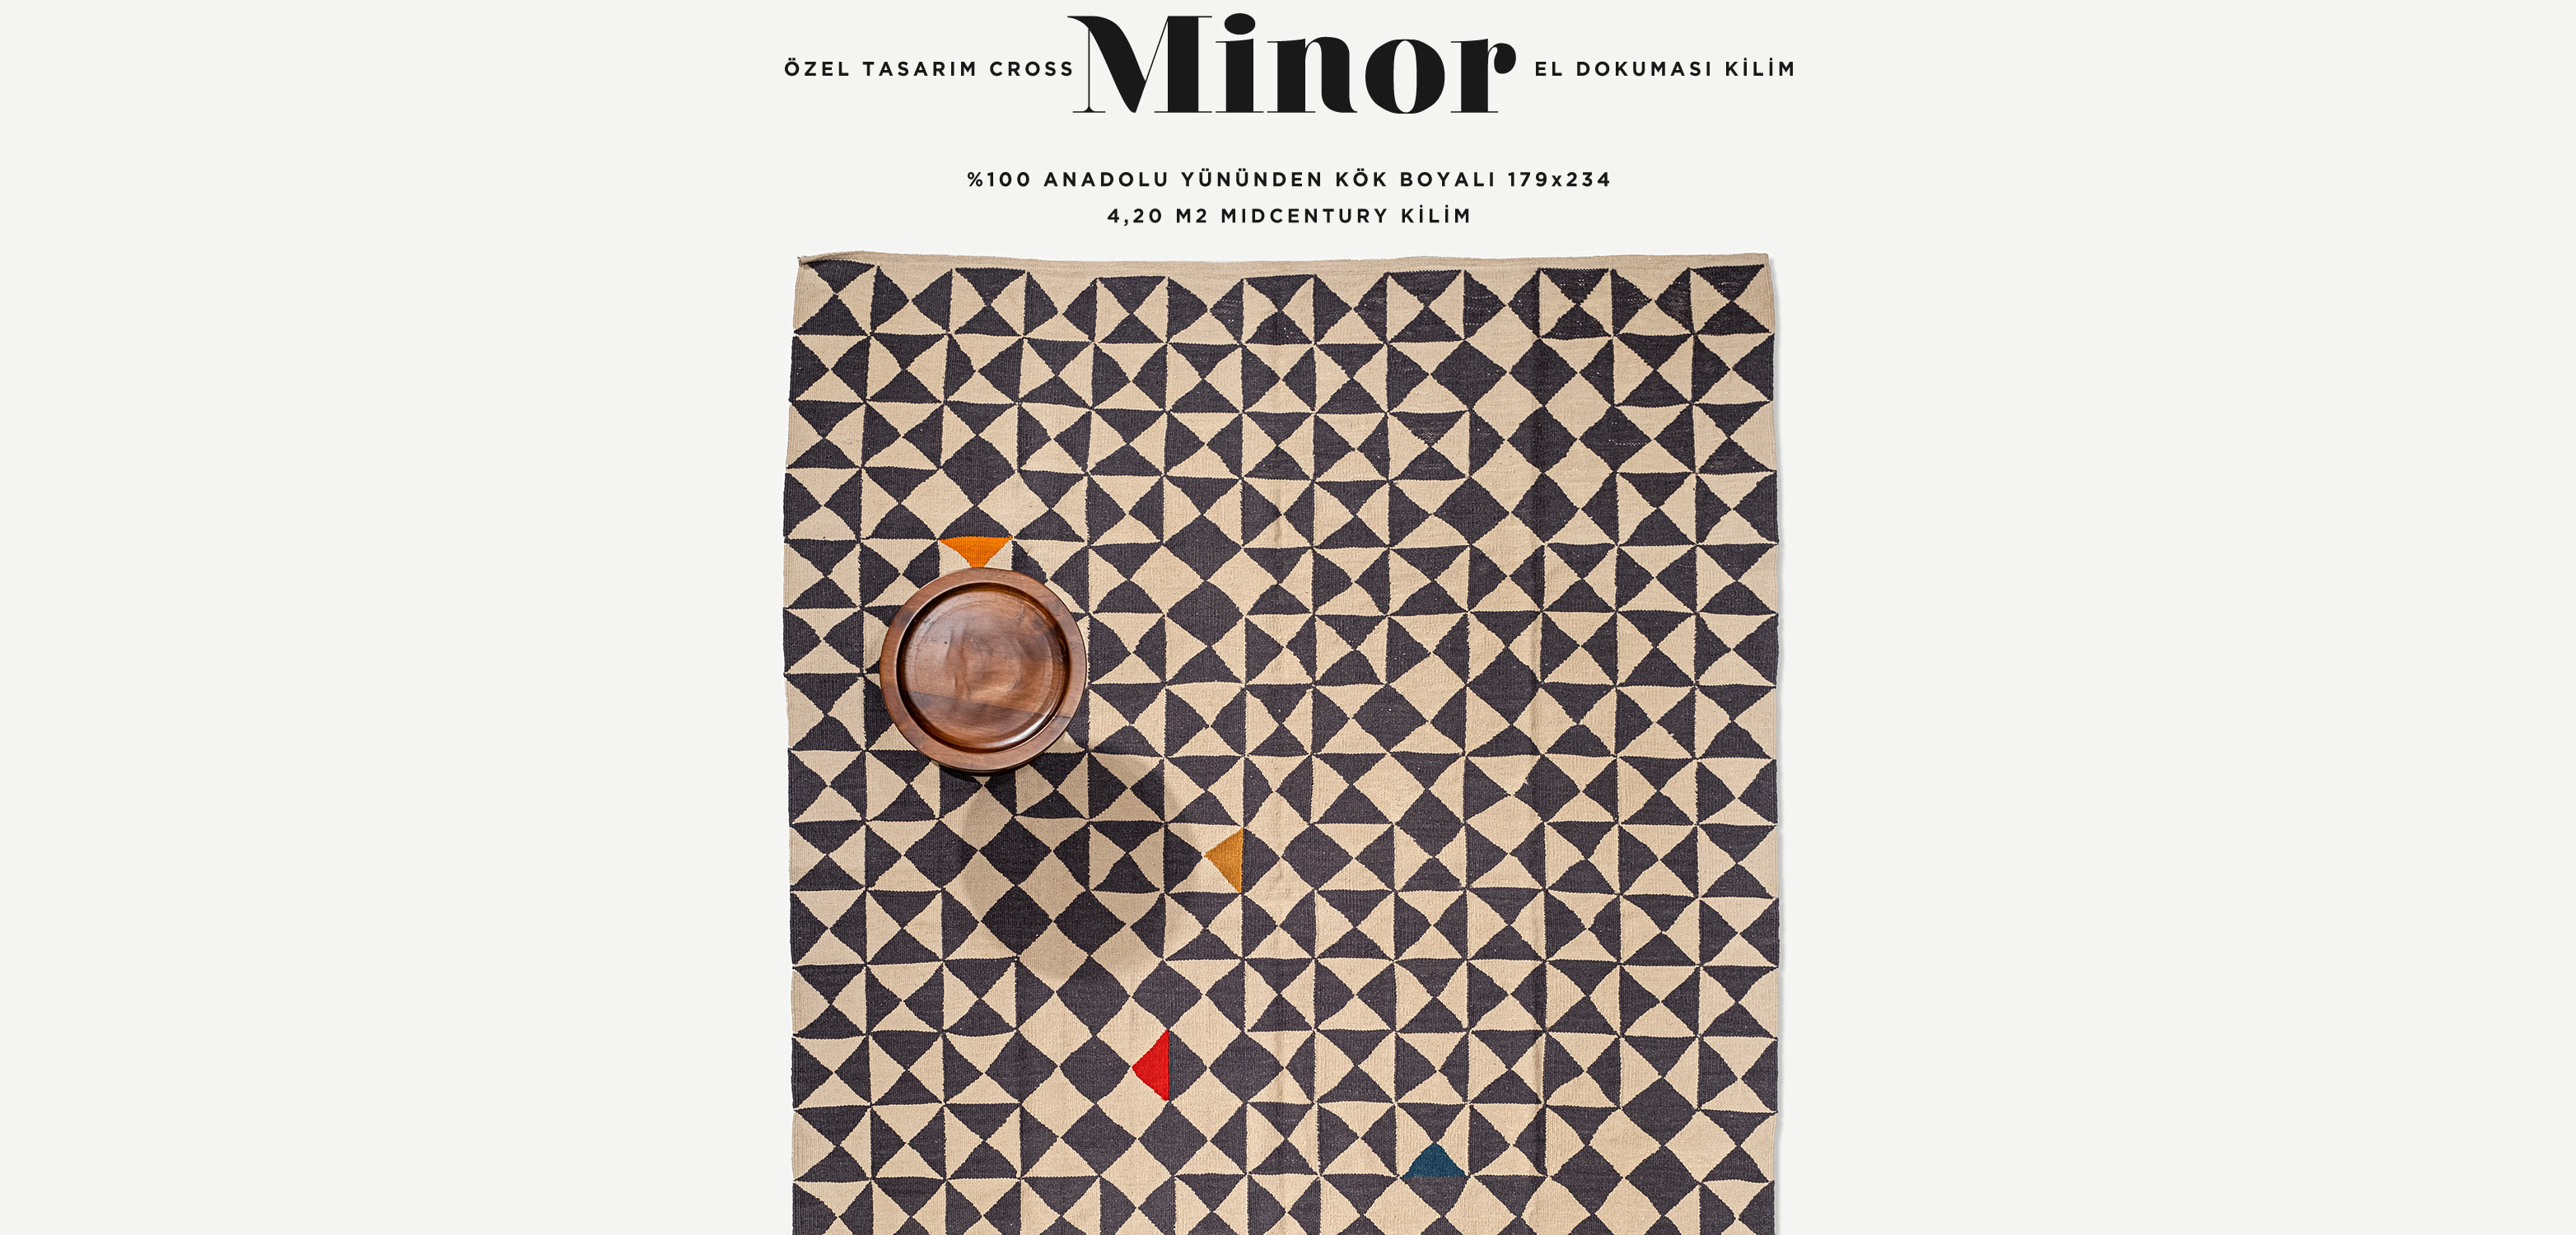 Cross Minor El Dokuması Kilim 179x234, 4,20 m2'in resmi